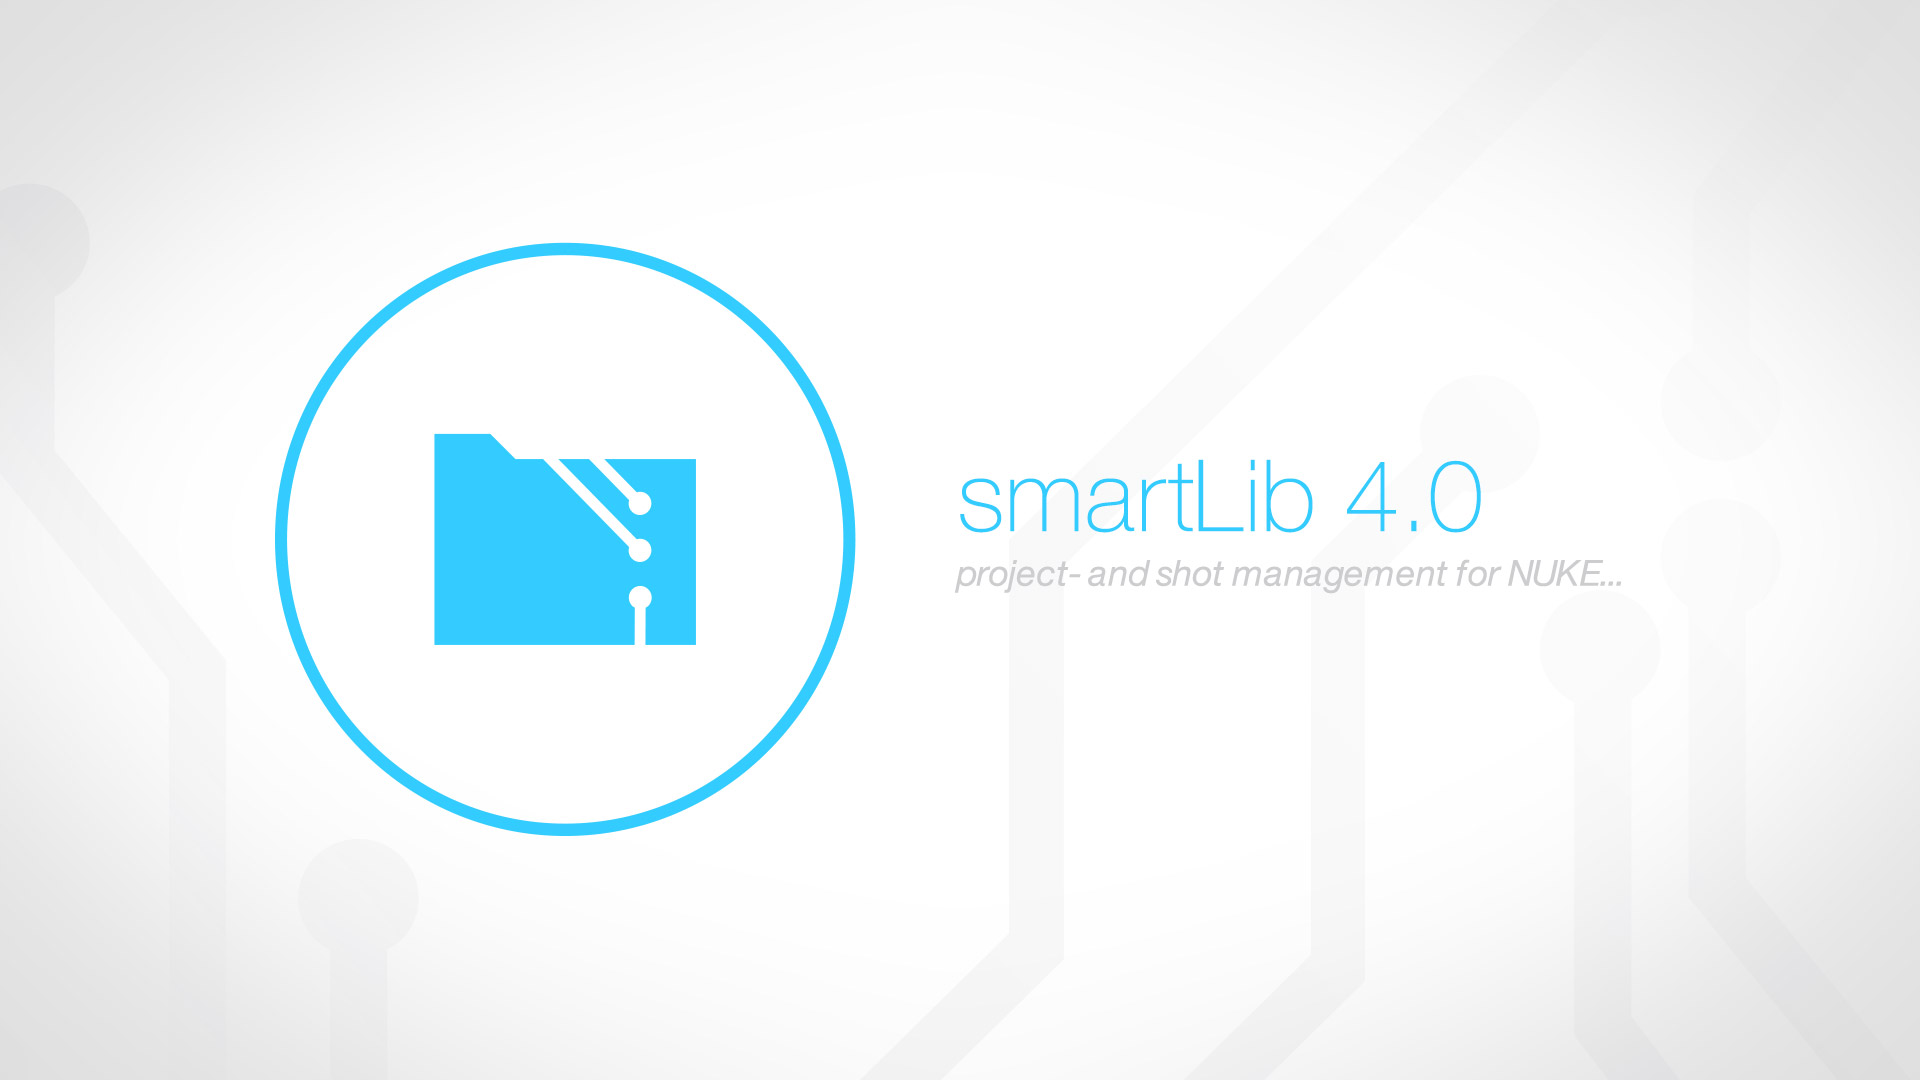 Published smartLib 4.0